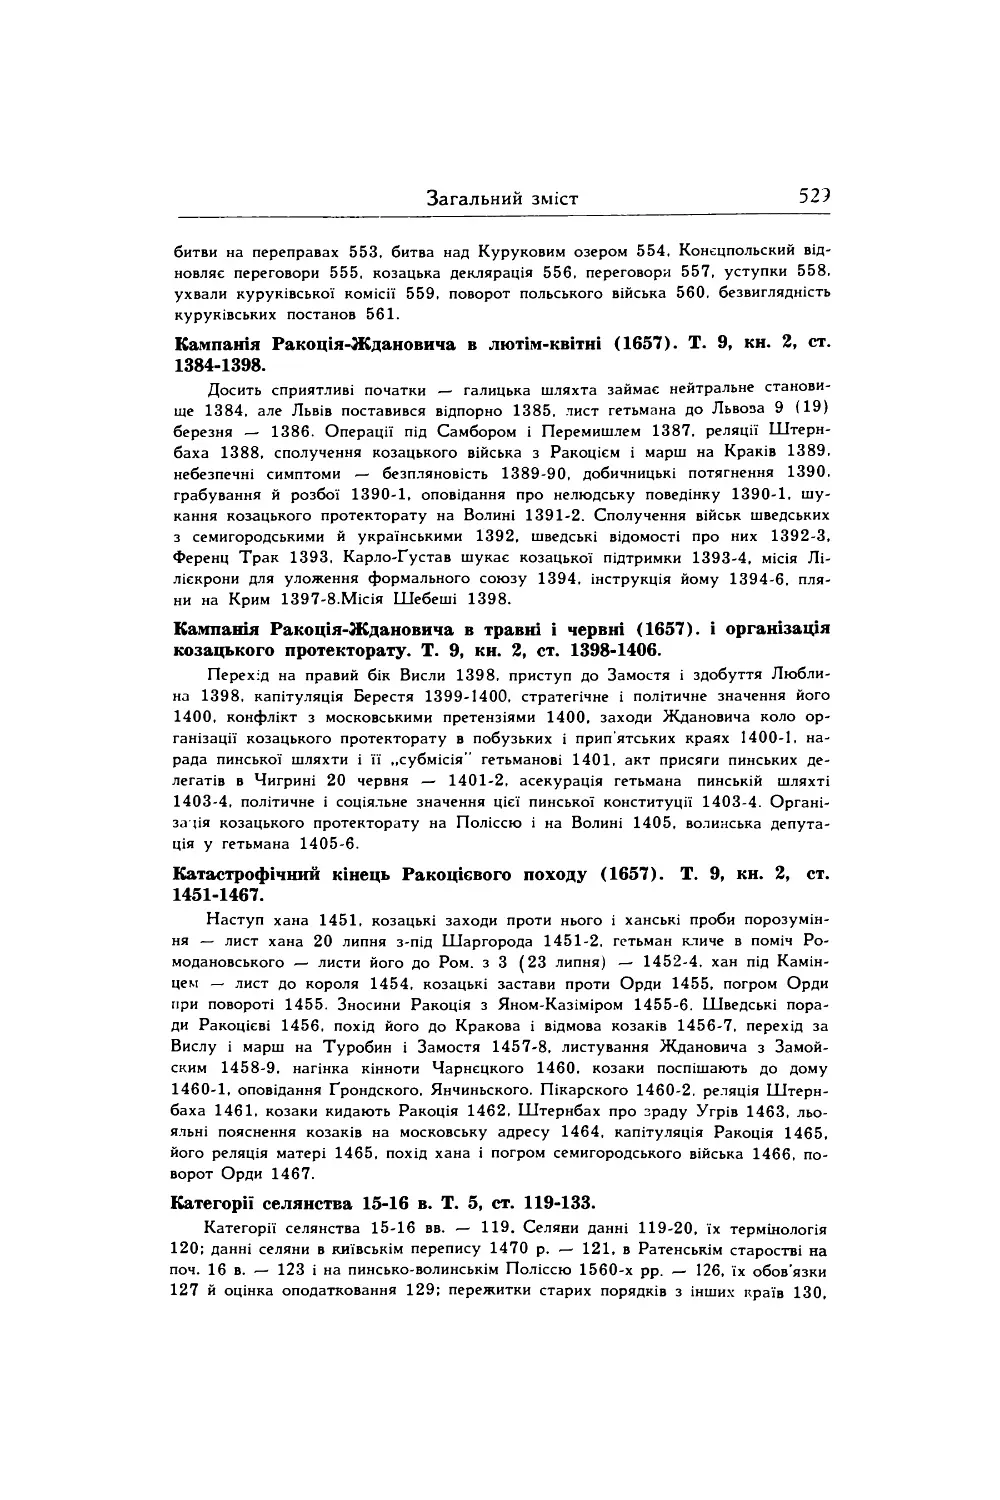 Категорії селянства 15-16 в. Т. 5, ст. 119-133.